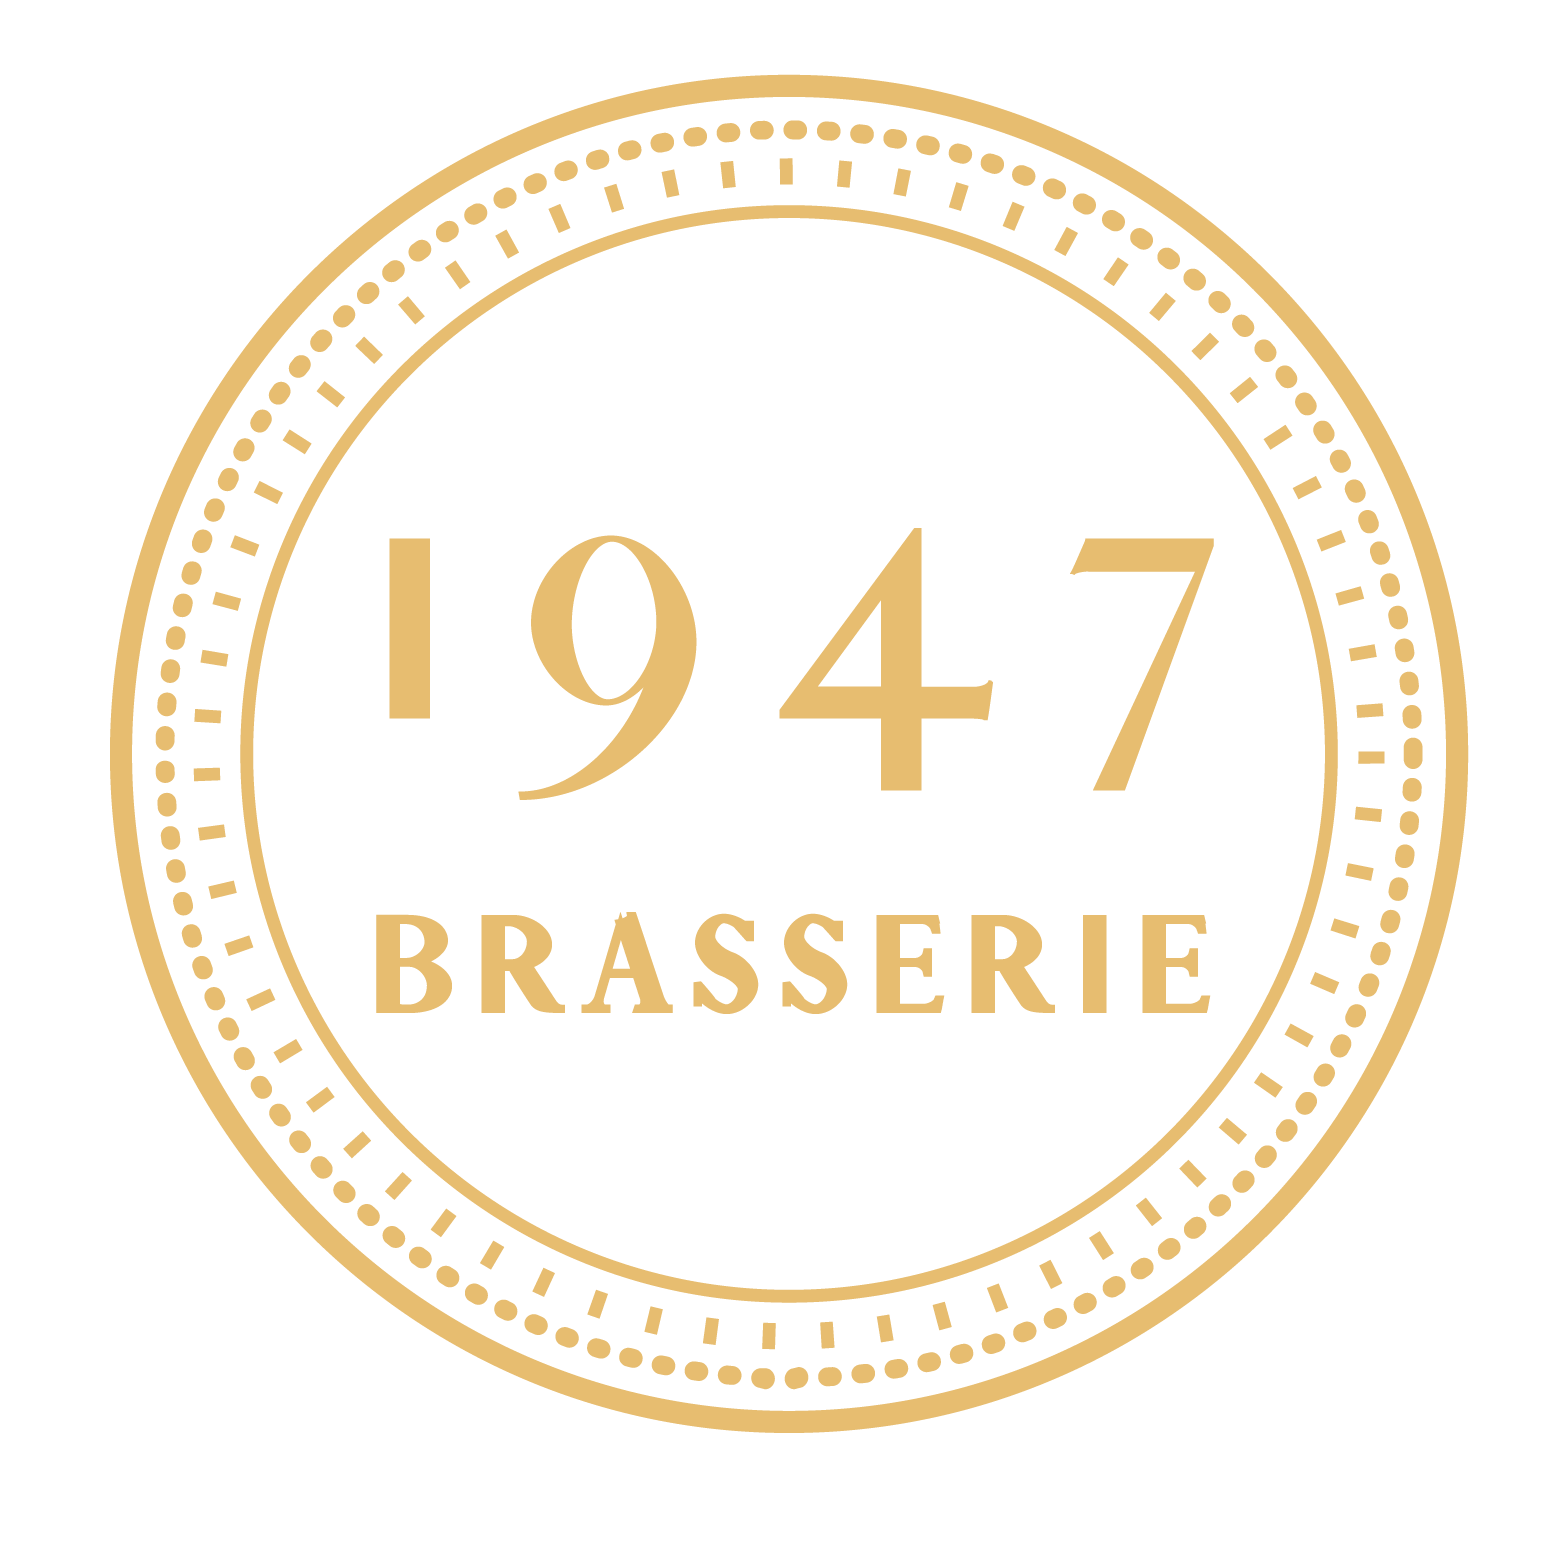 1947 Brasserie